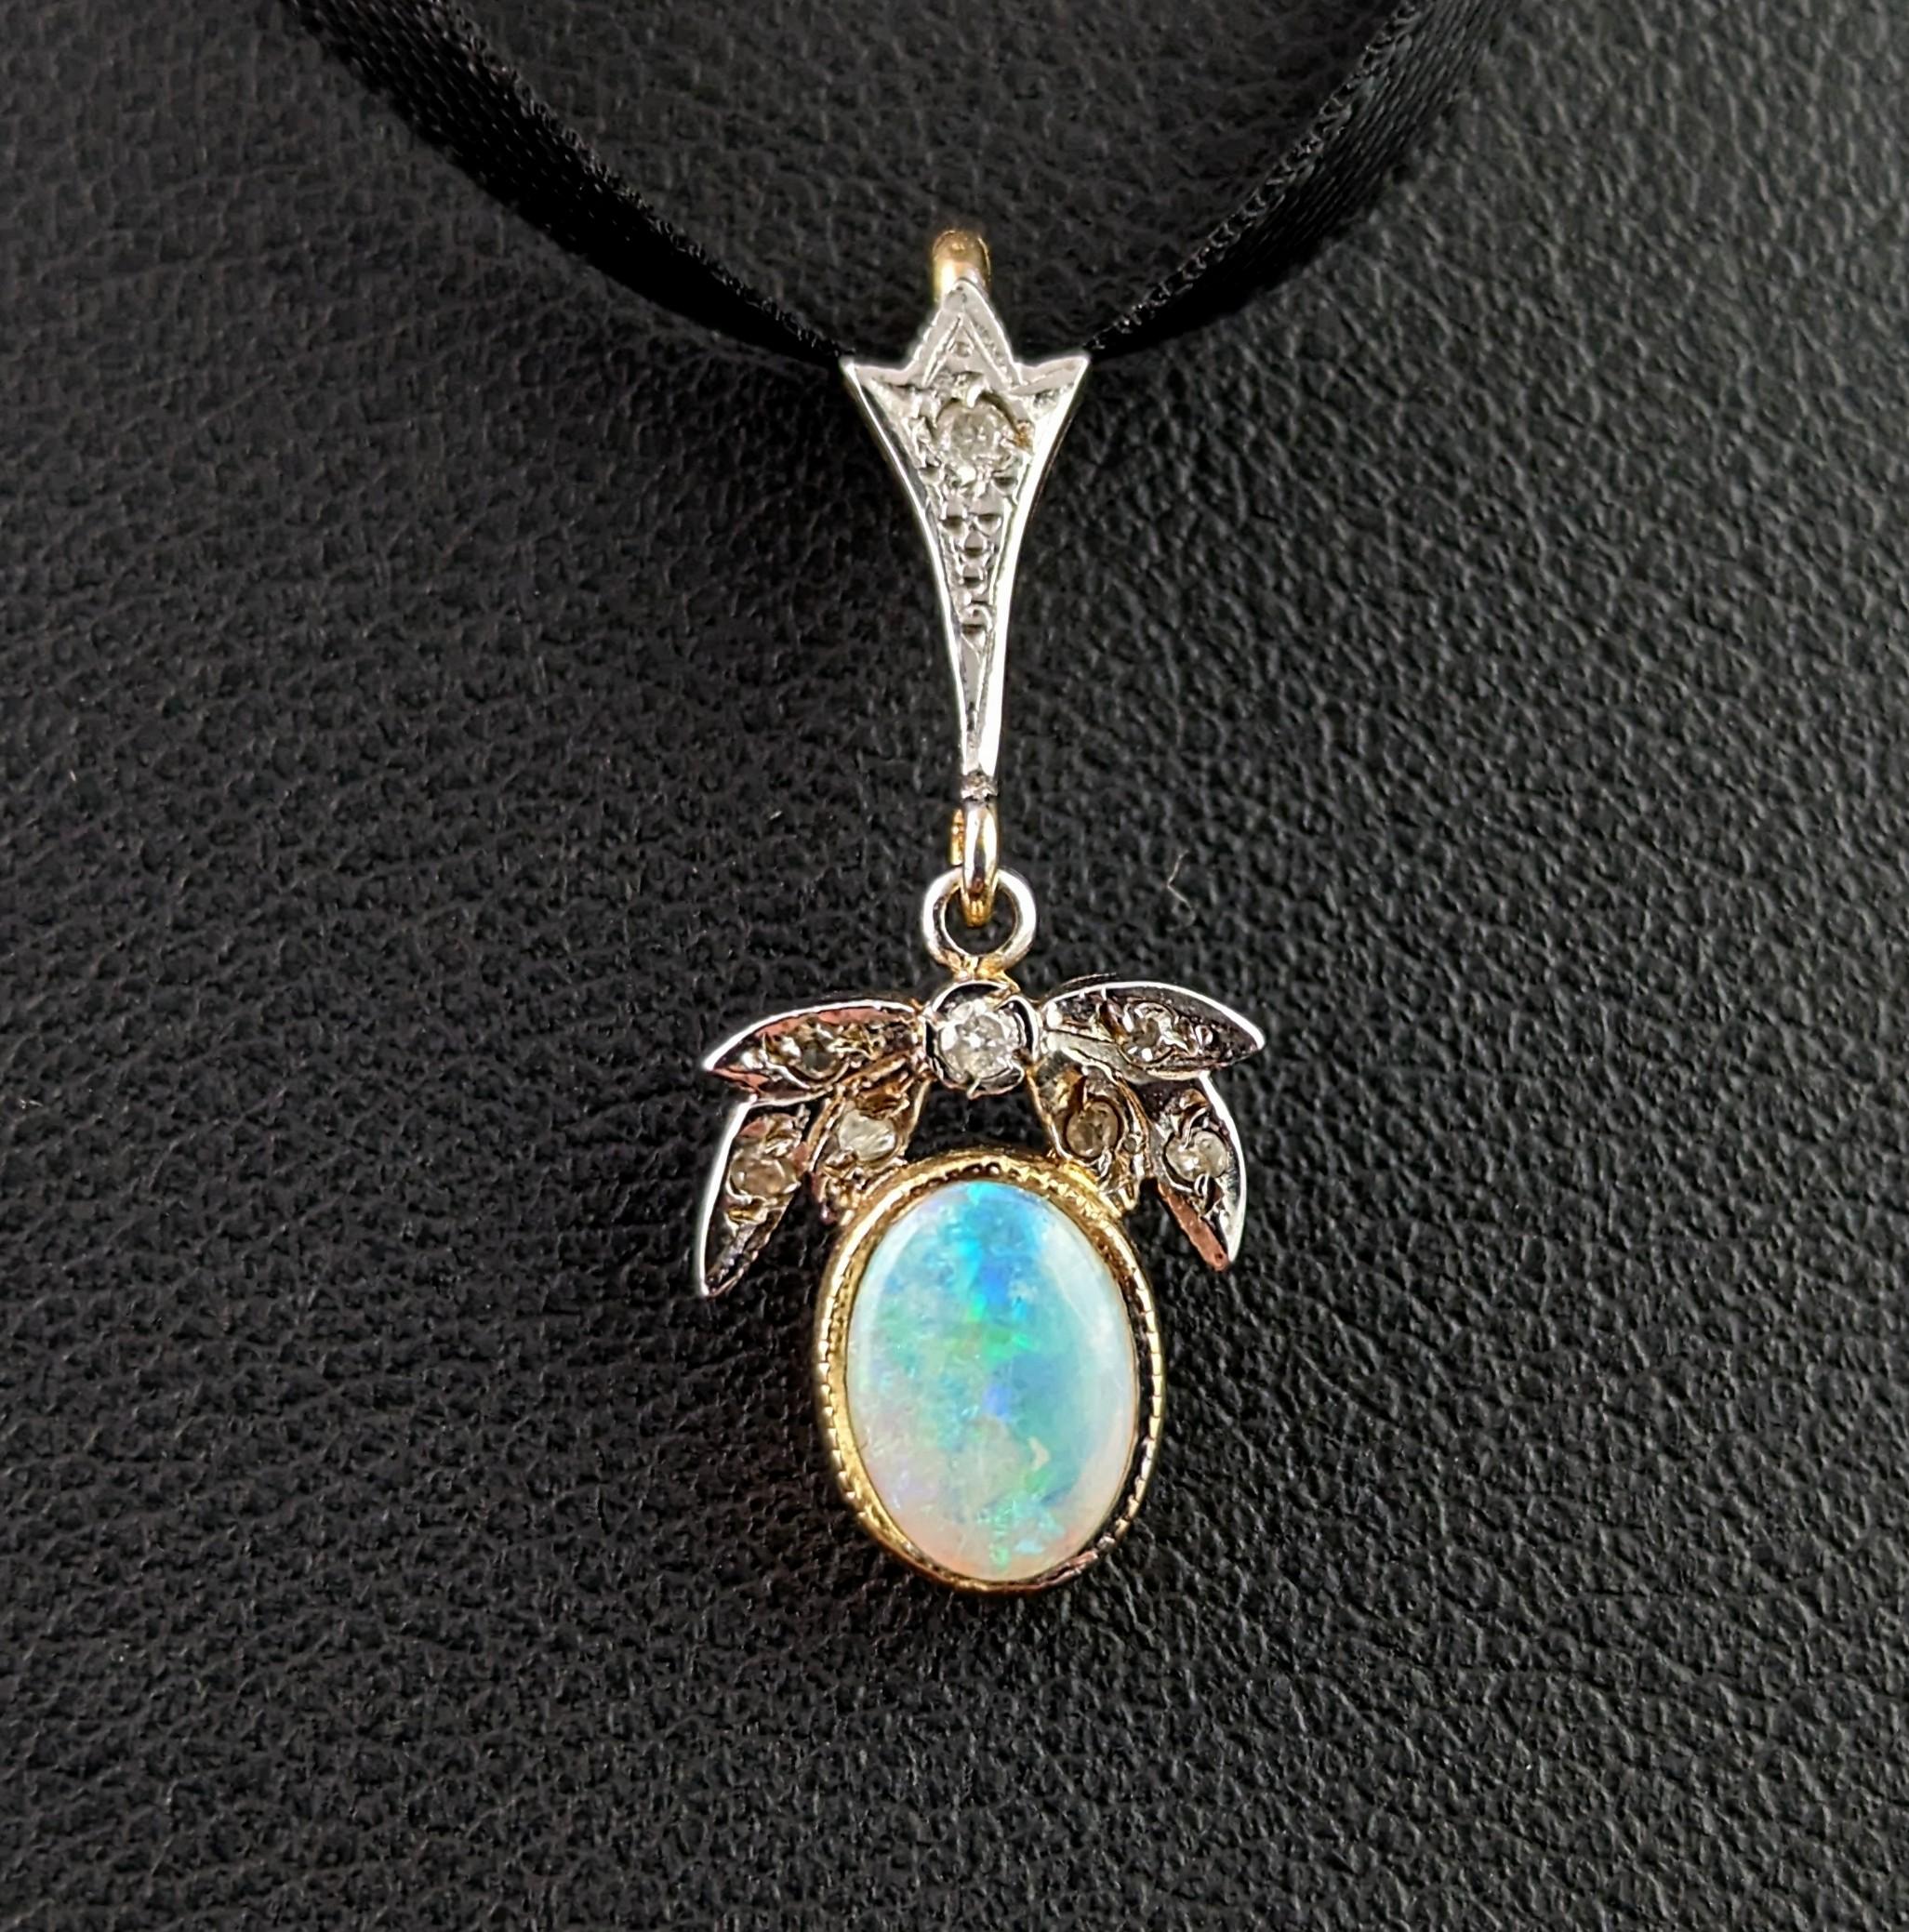 Women's or Men's Vintage Opal and Diamond pendant, 9k gold, Dainty, Art Deco style 